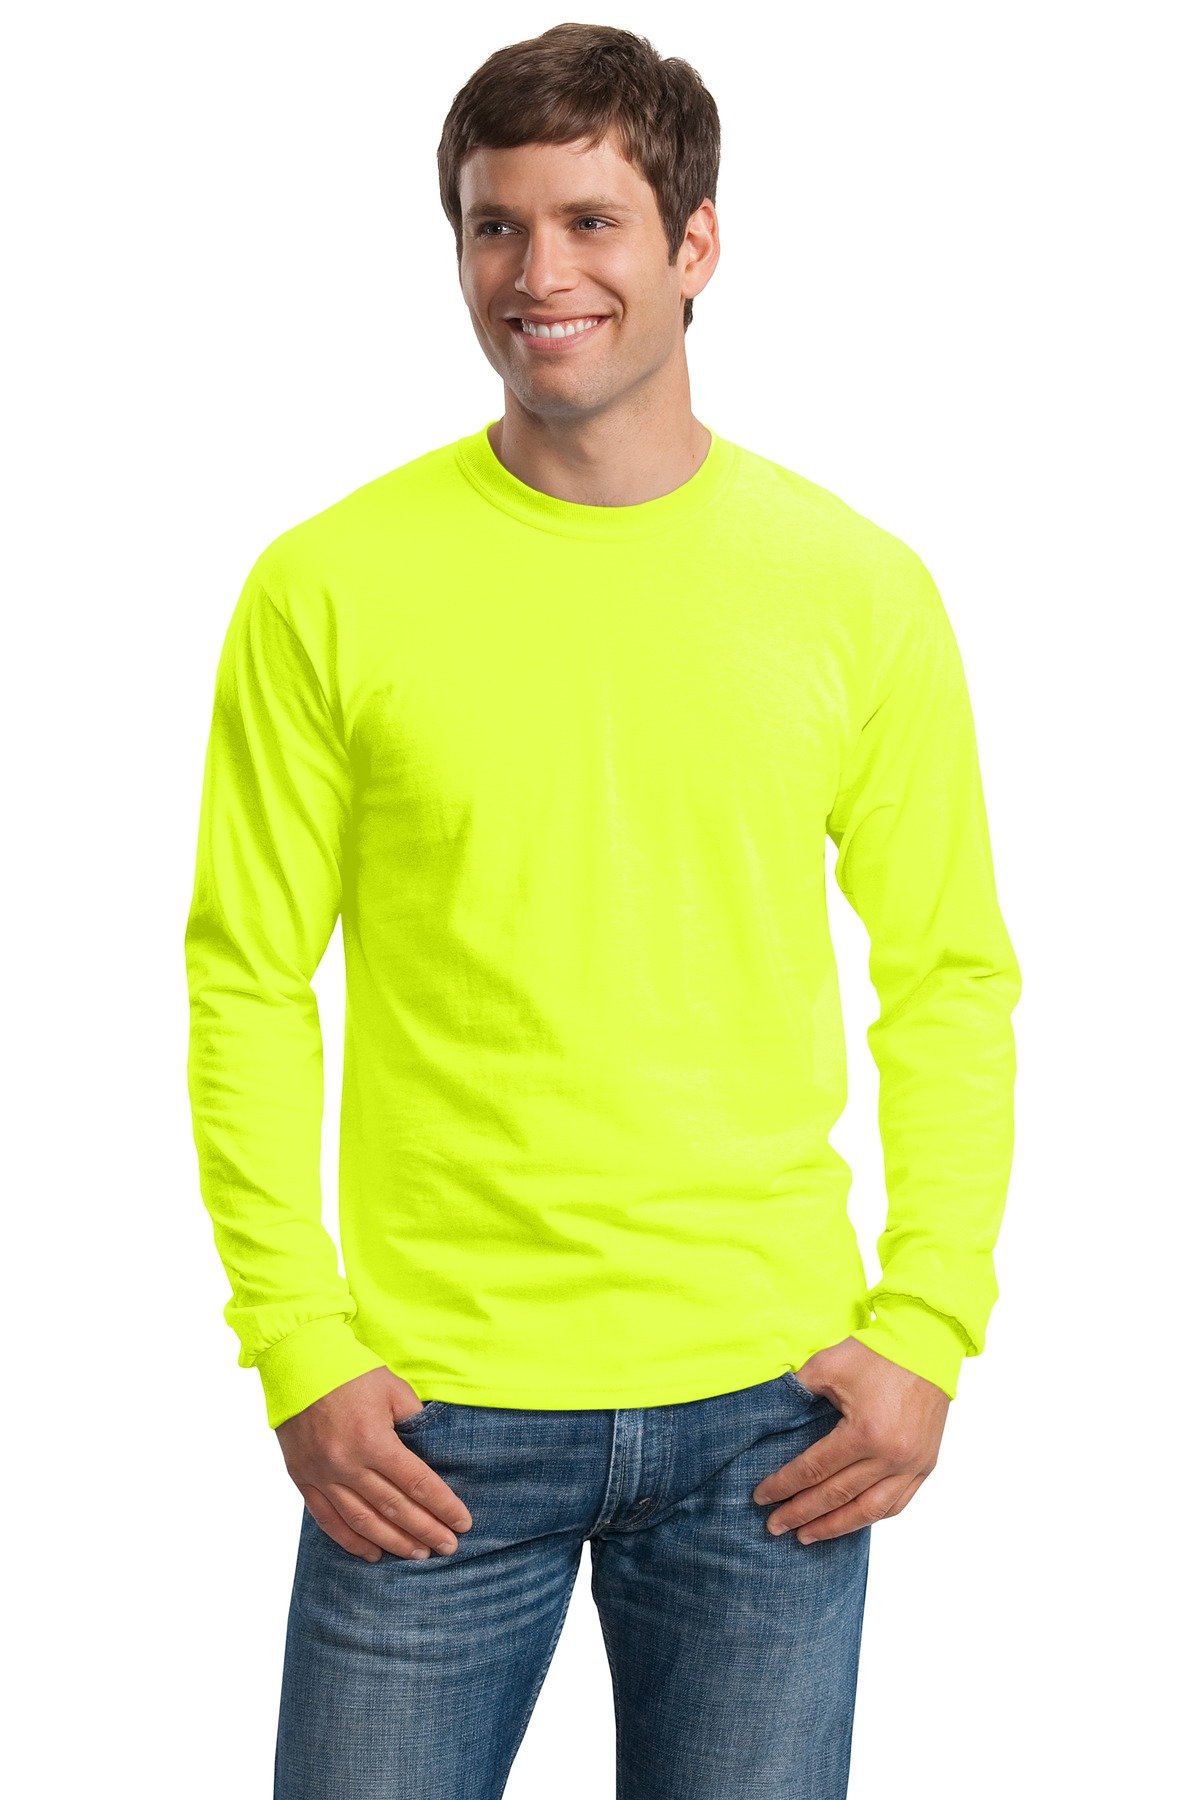 Gildan Ultra Cotton Long Sleeve T-Shirt, Style G2400, Multipack